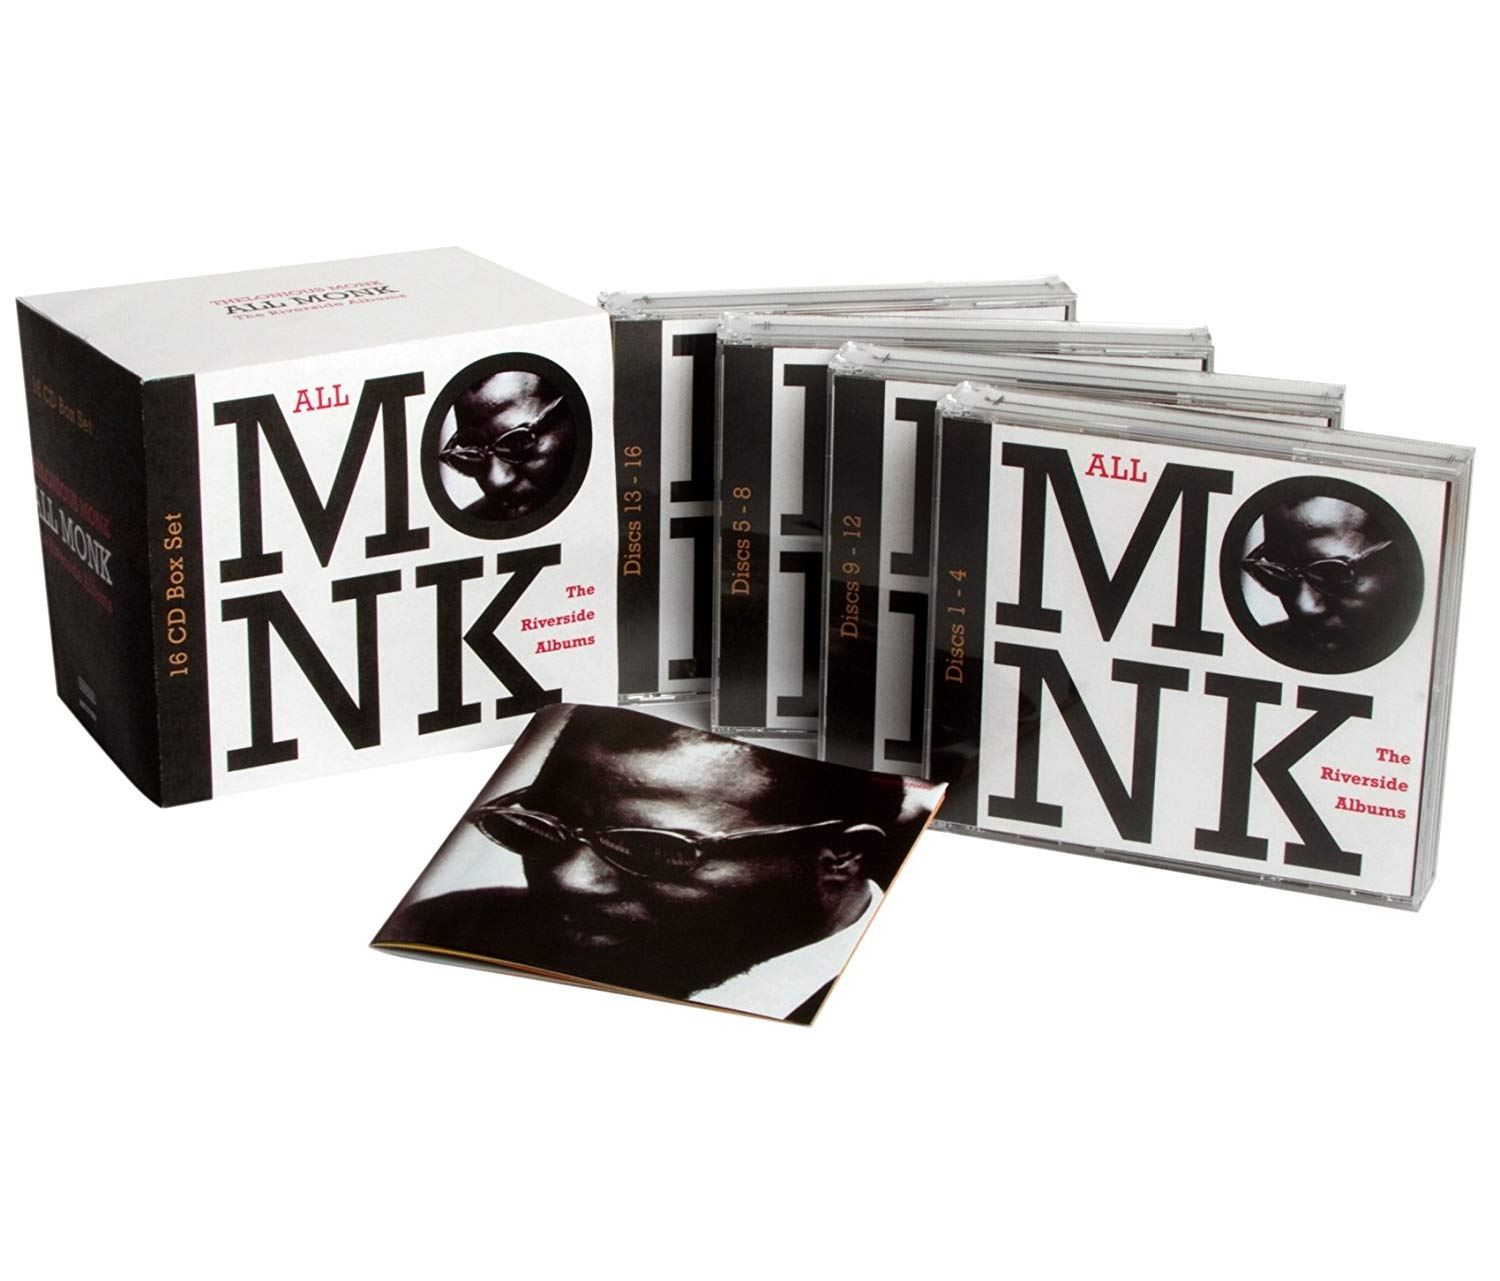 All Monk The Riverside Albums Boxset